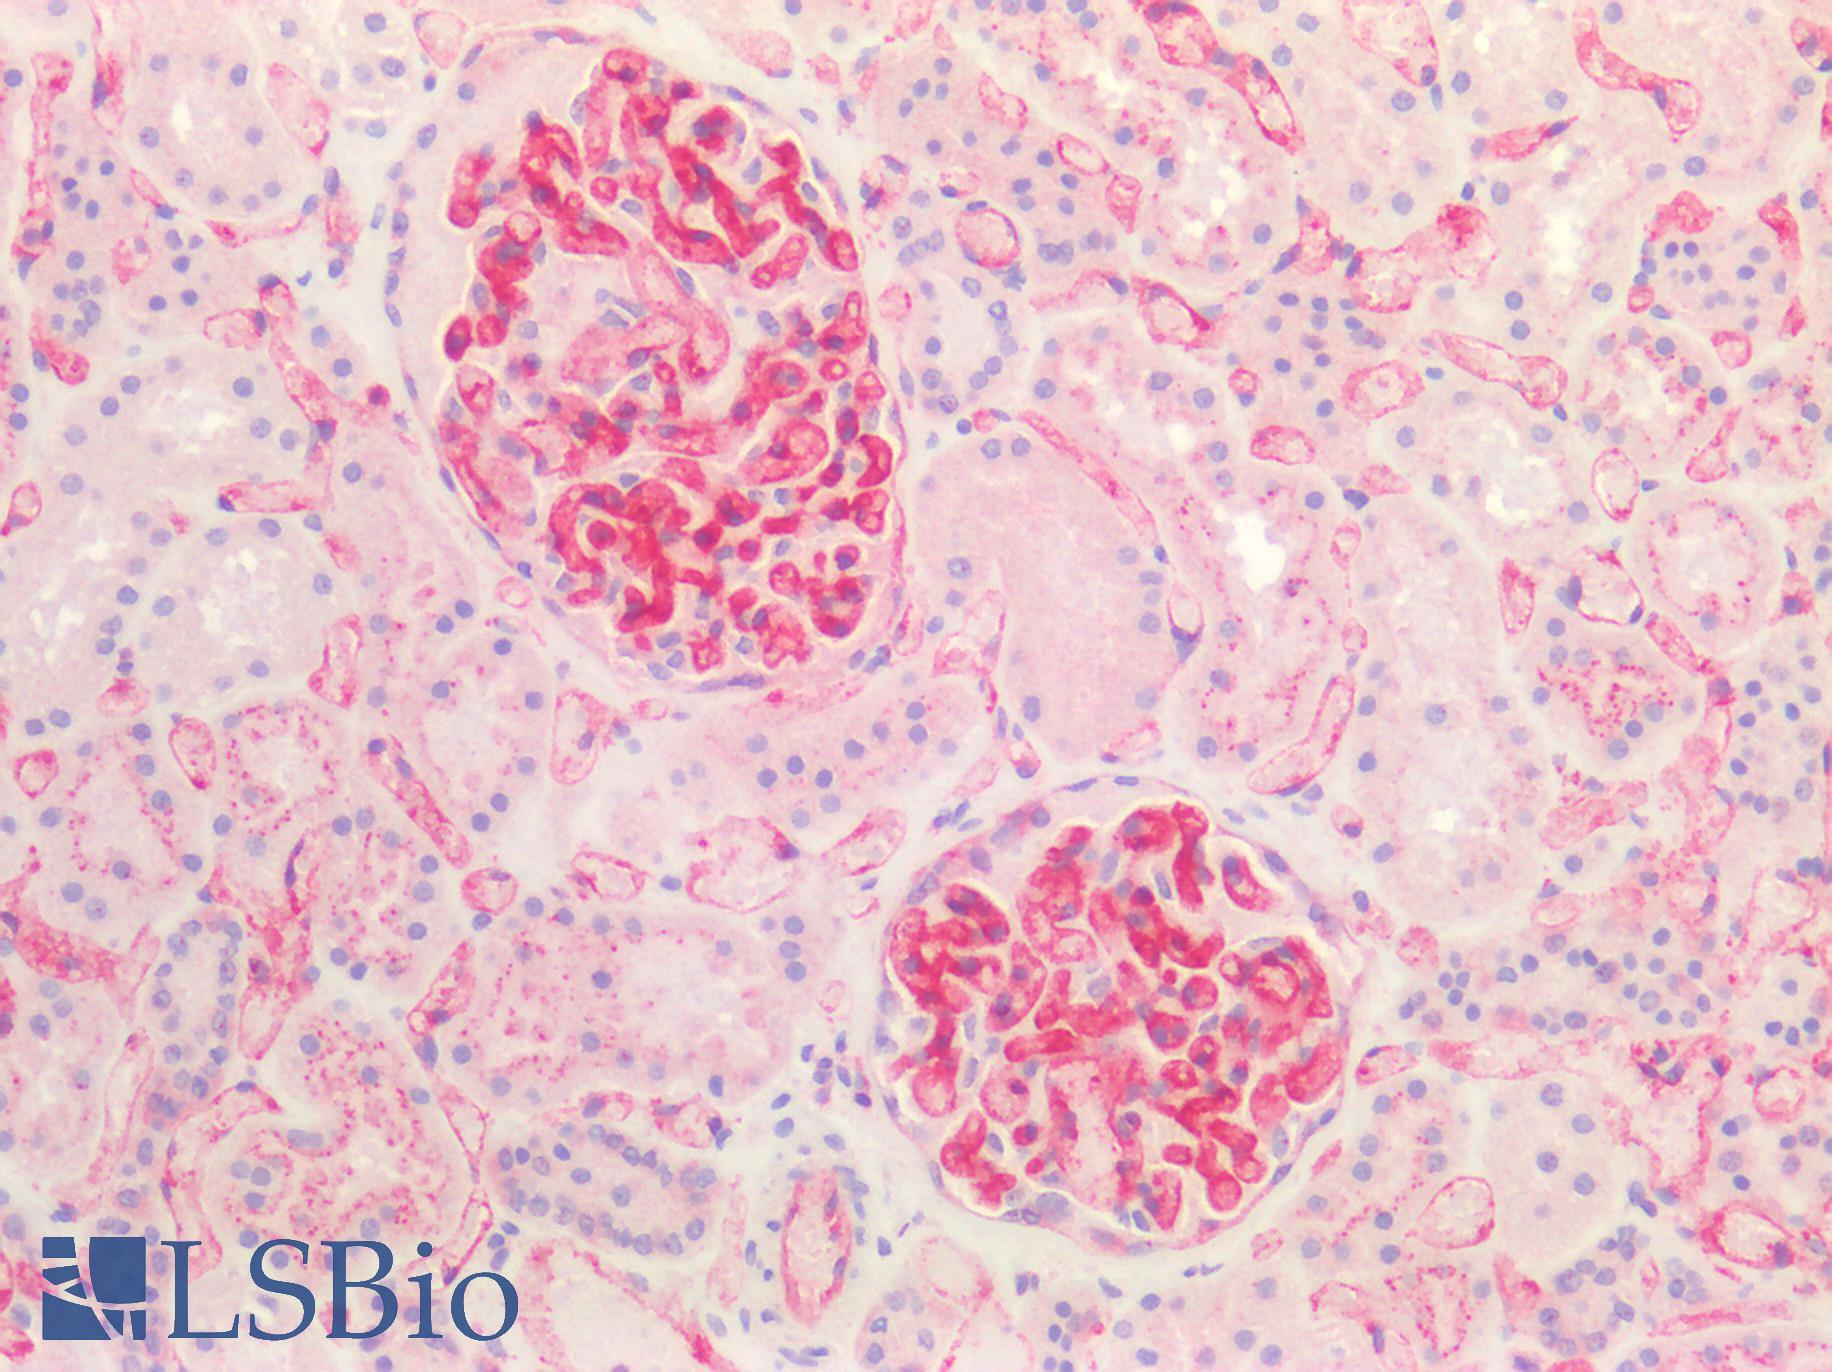 B2M / Beta 2 Microglobulin Antibody - Human Kidney: Formalin-Fixed, Paraffin-Embedded (FFPE)